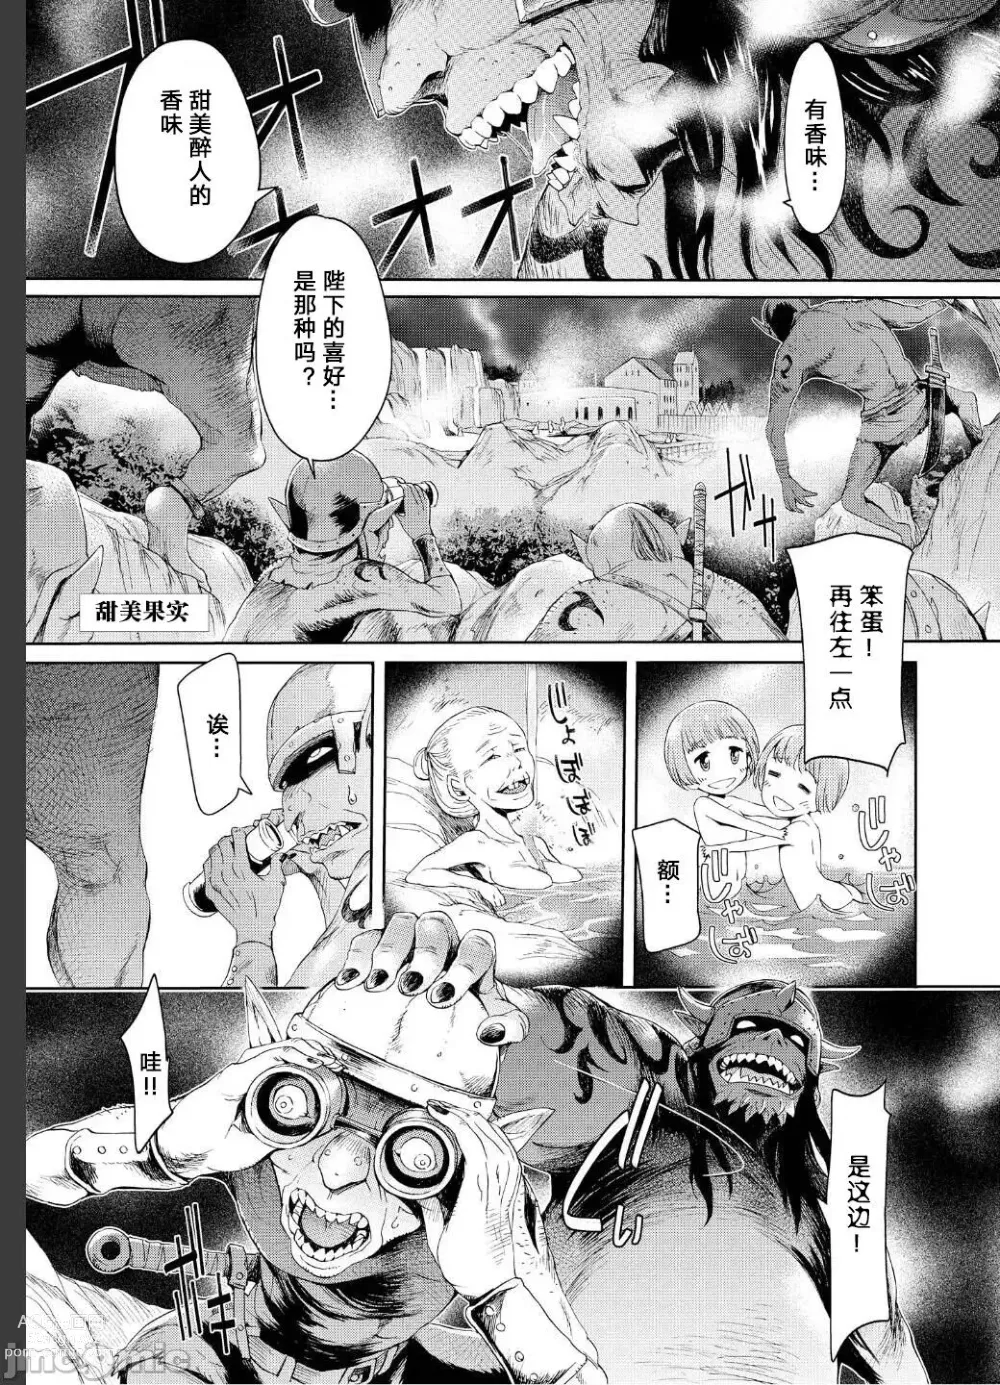 Page 1 of manga Sweet fruit